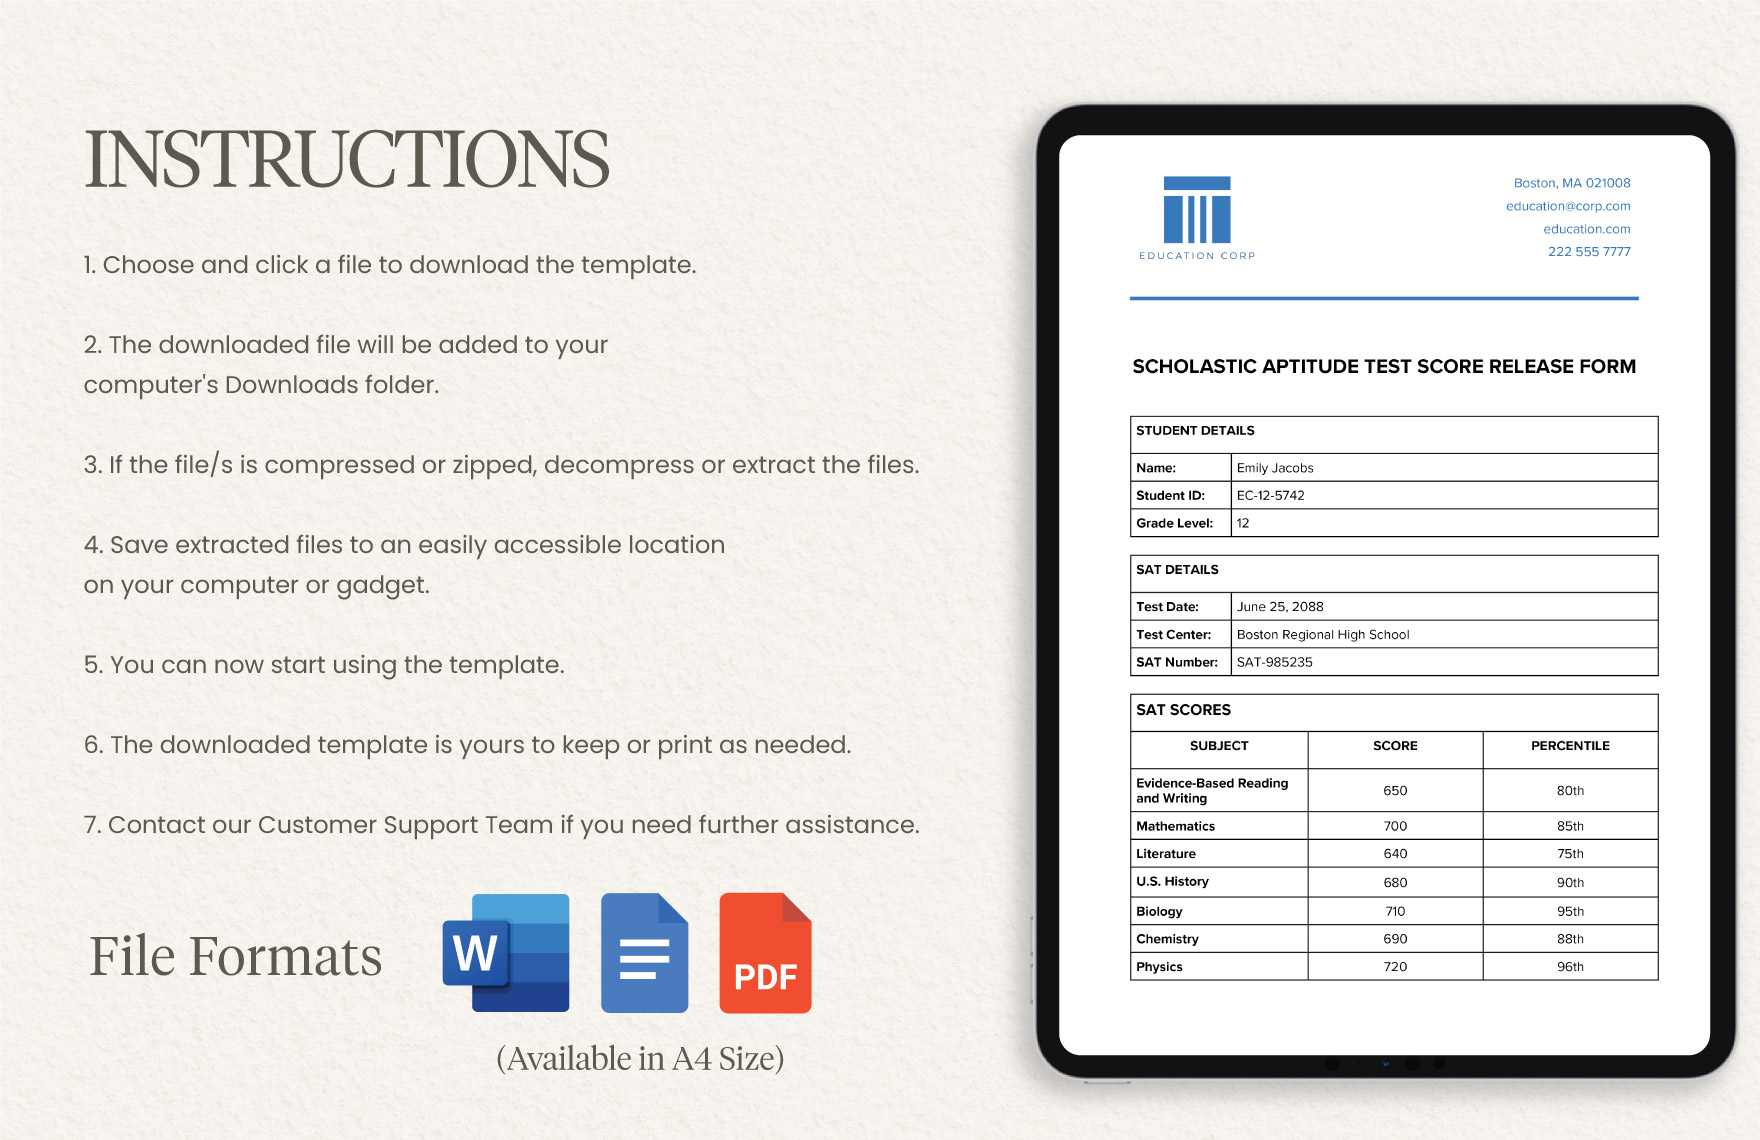 Scholastic Aptitude Test Score Release Form Template - Download in Word,  Google Docs, PDF